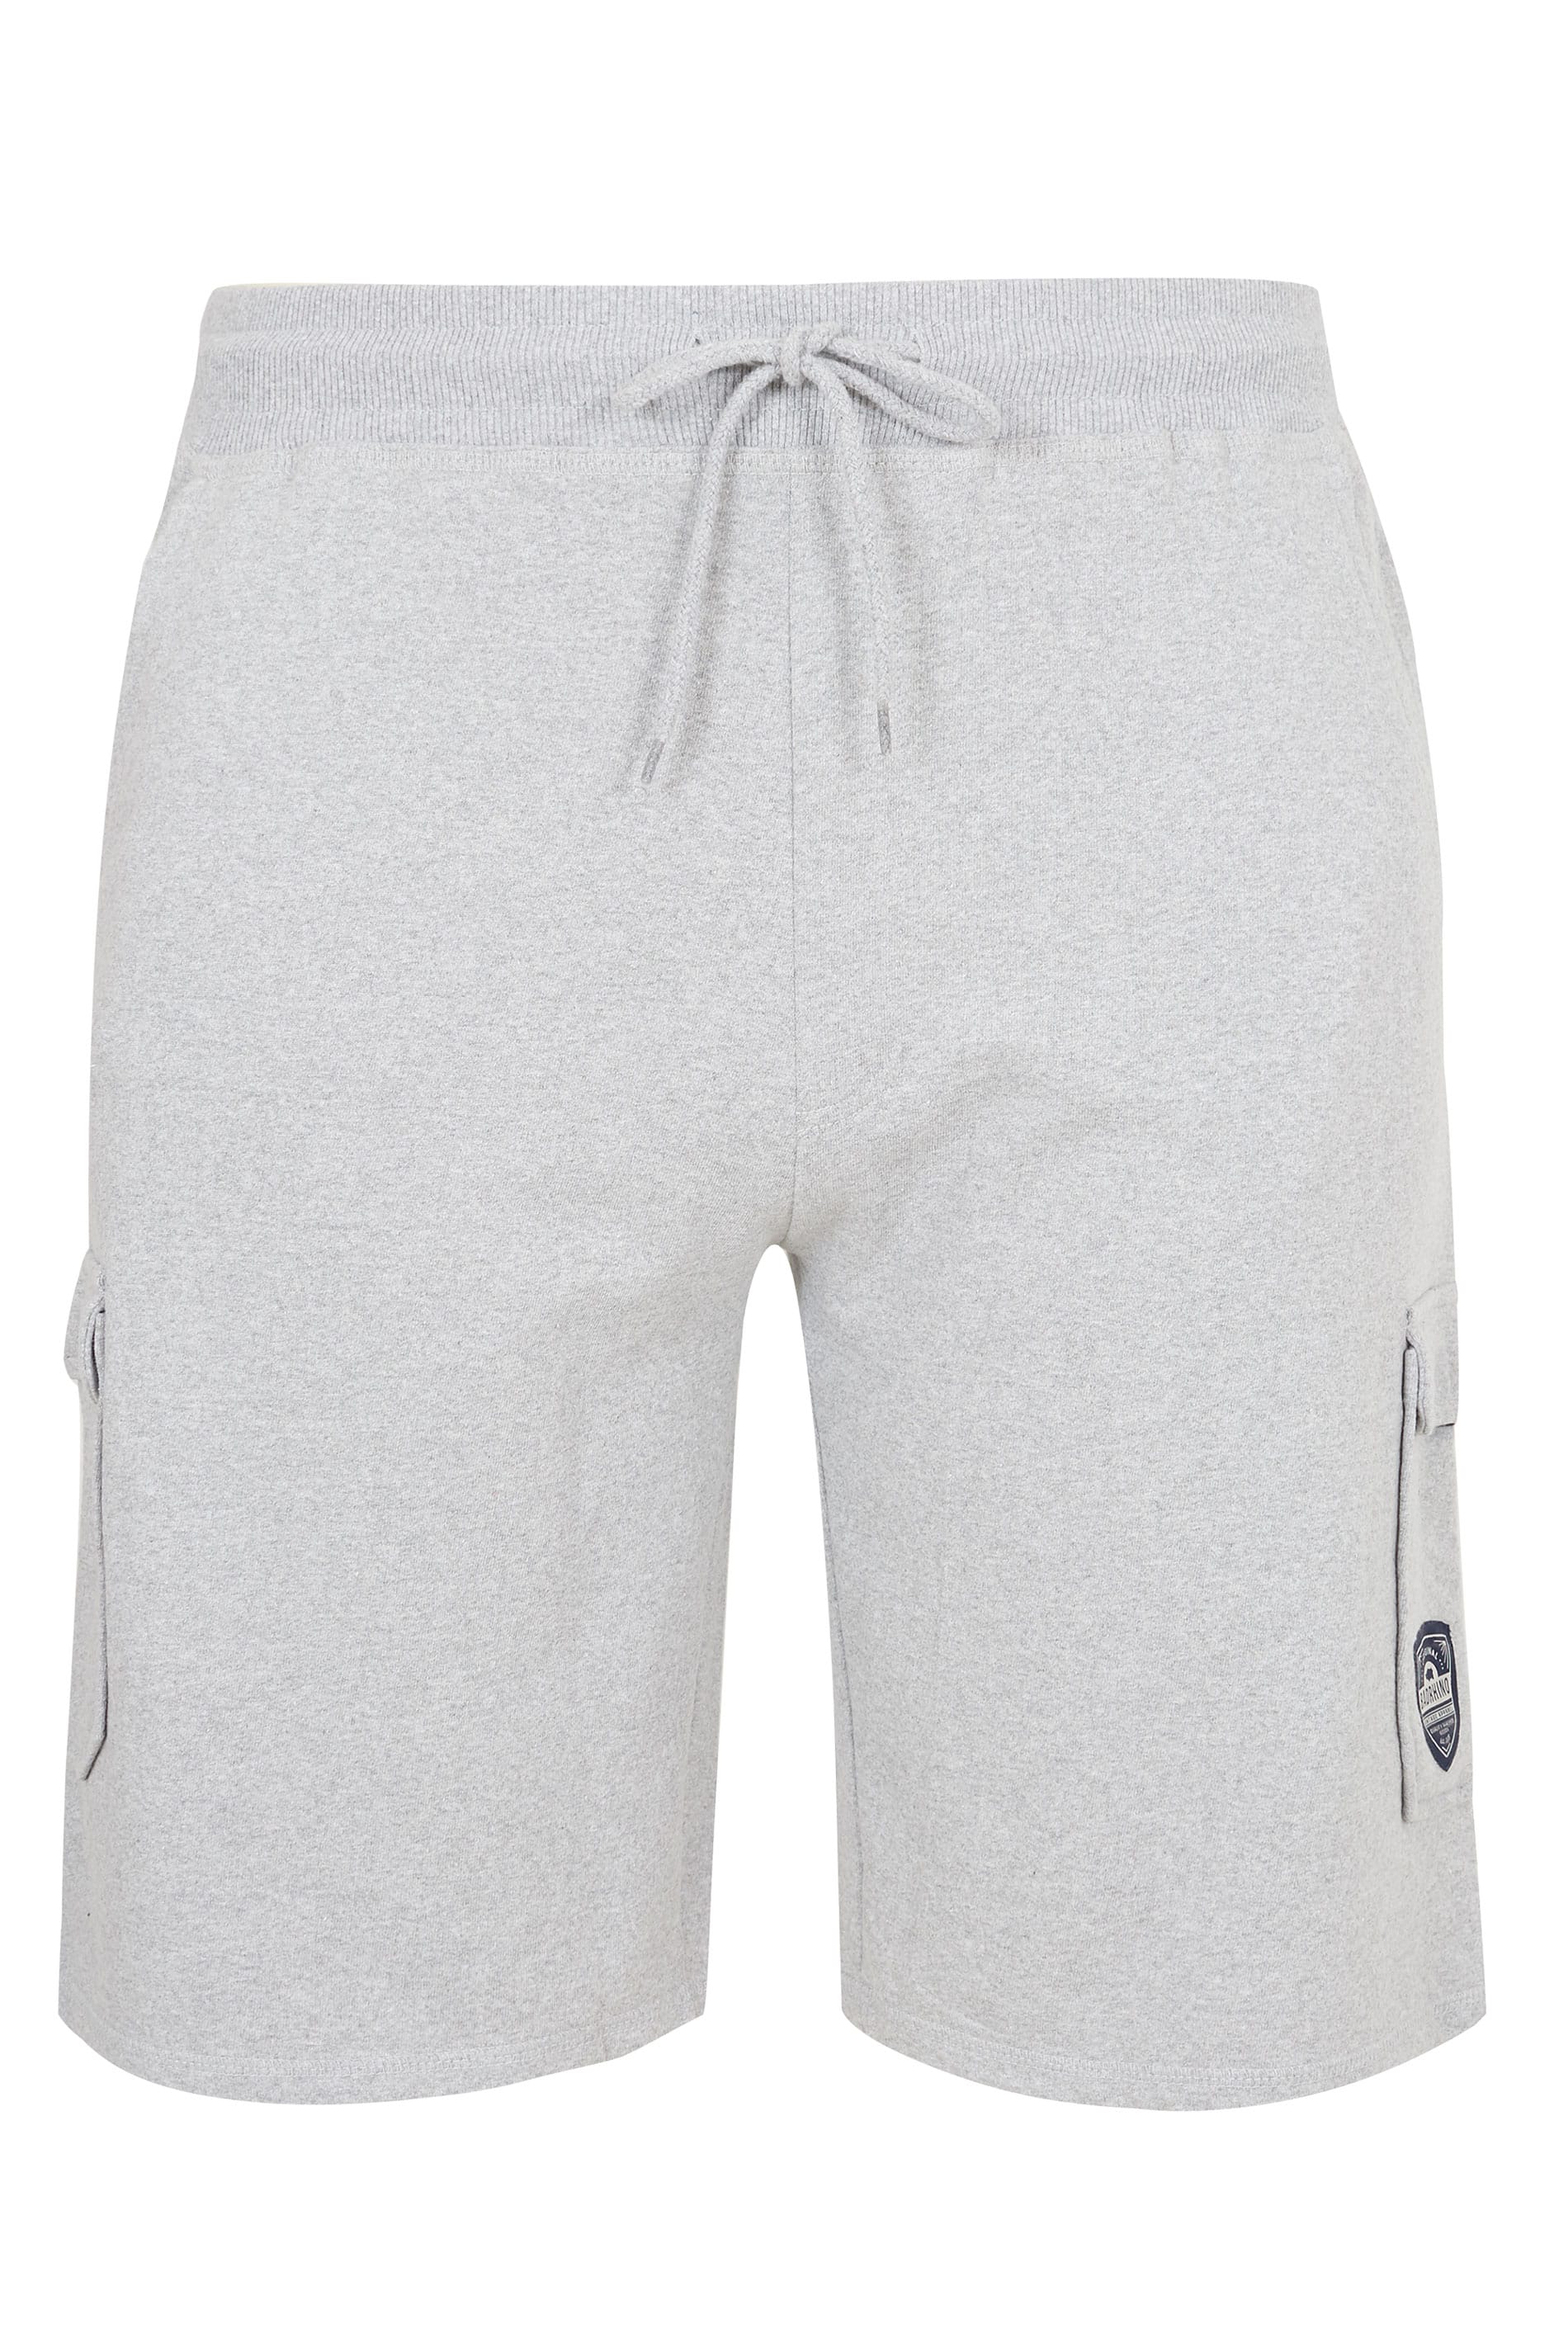 BadRhino Grey Marl Cargo Jersey Shorts | Big Sizes M to 8XL | BadRhino